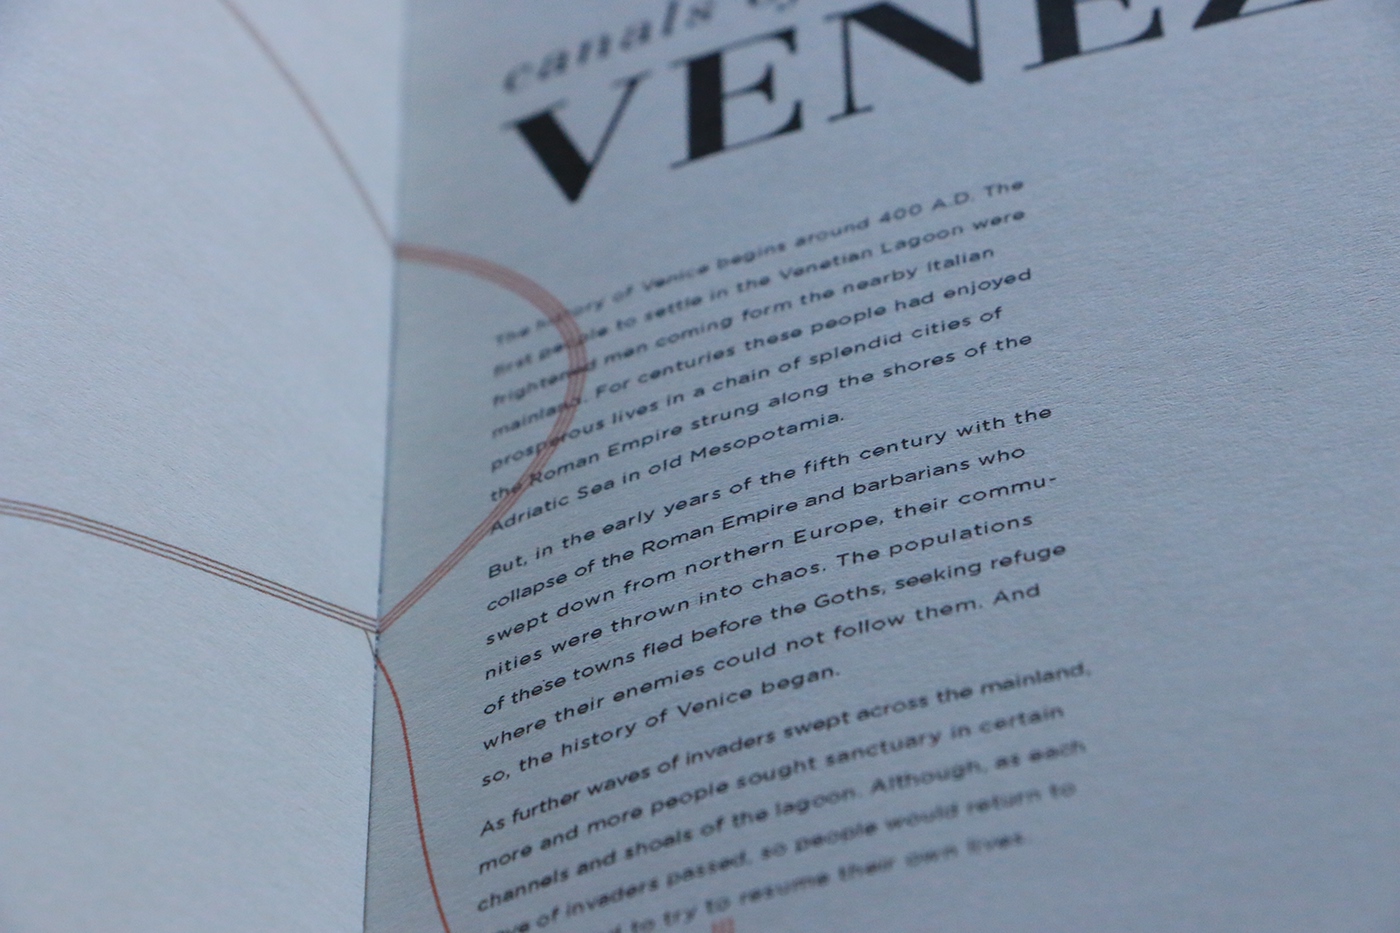 Venice graphic design  typography   book gotham basilia skate canals Italy California